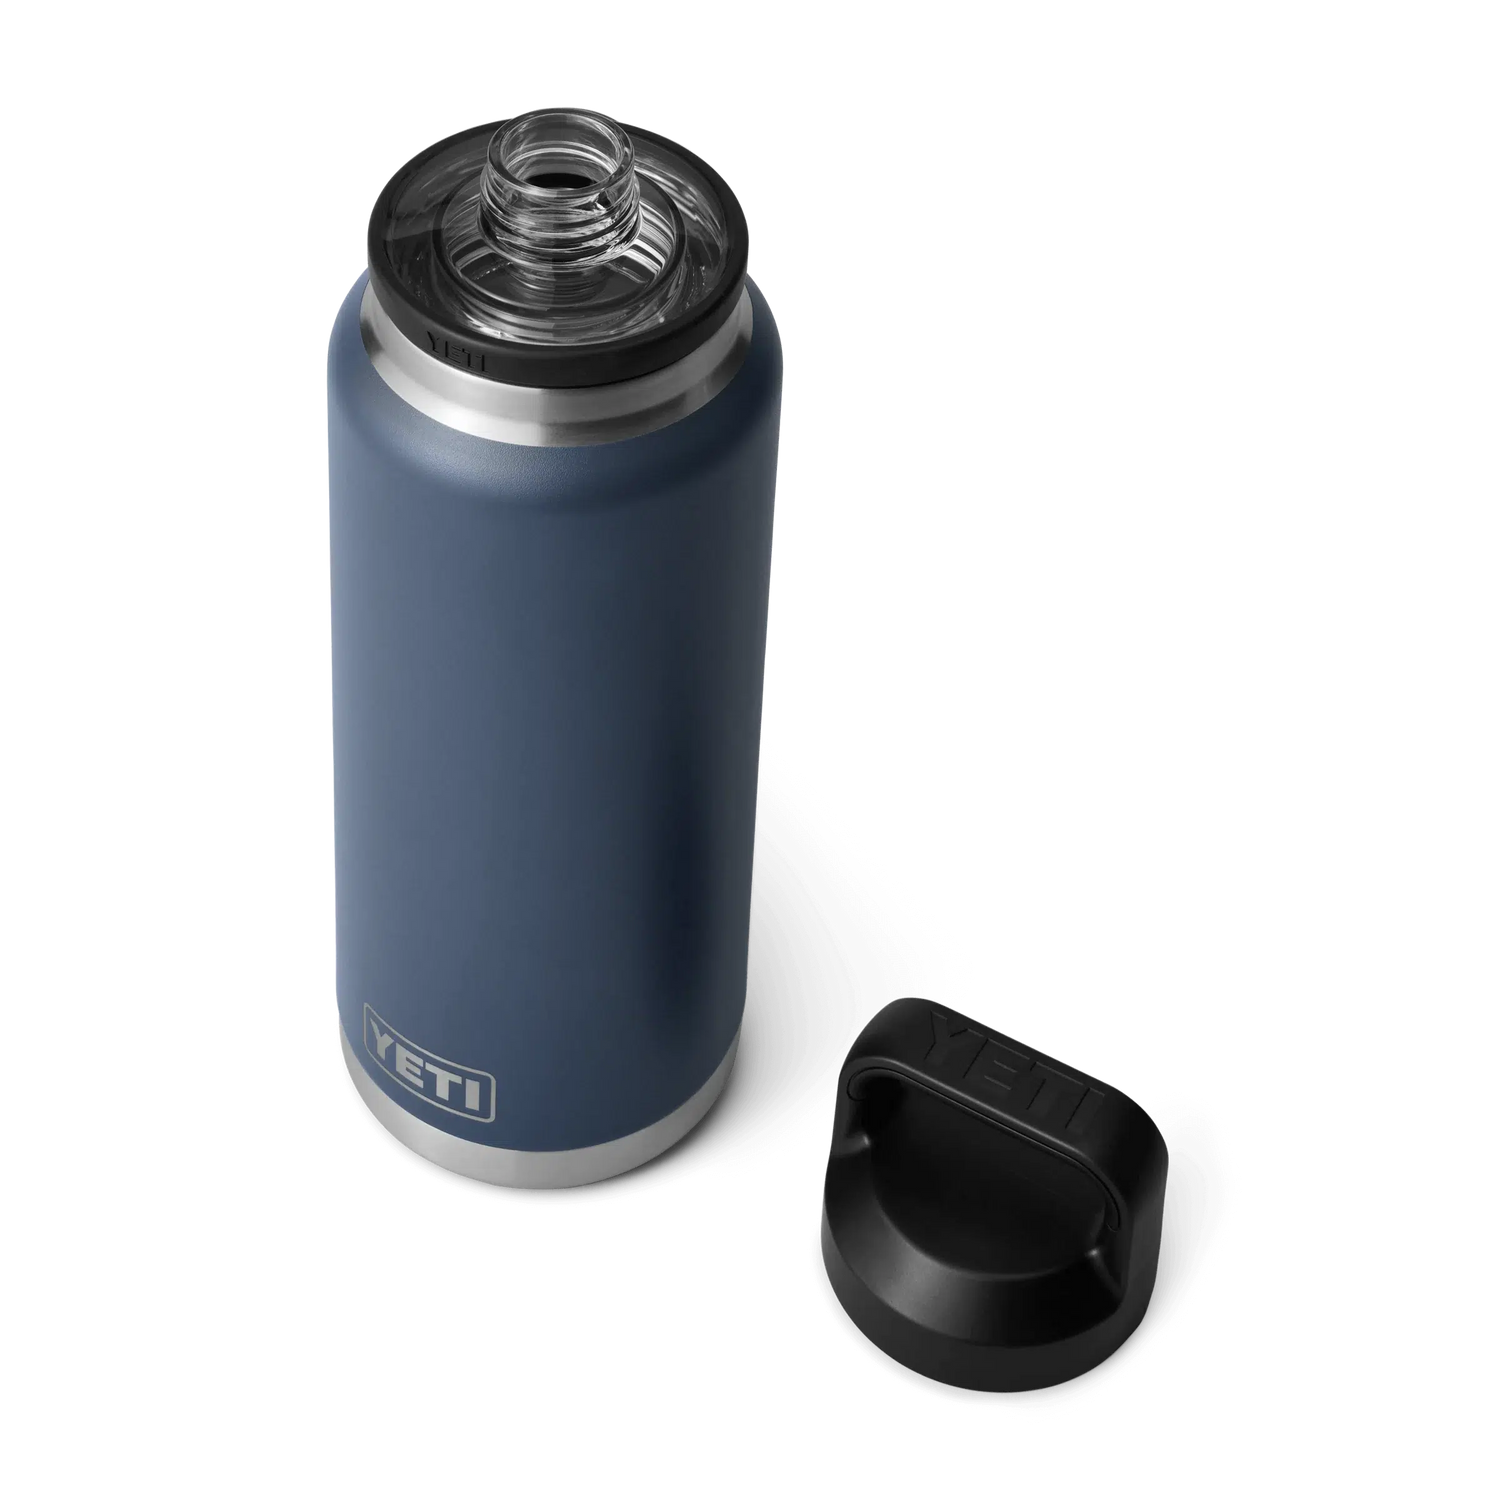 Yeti Rambler 36oz (1L) Reuseable Bottle with Chug Cap-Coolers & Drinkware-Yeti-Navy-Fishing Station